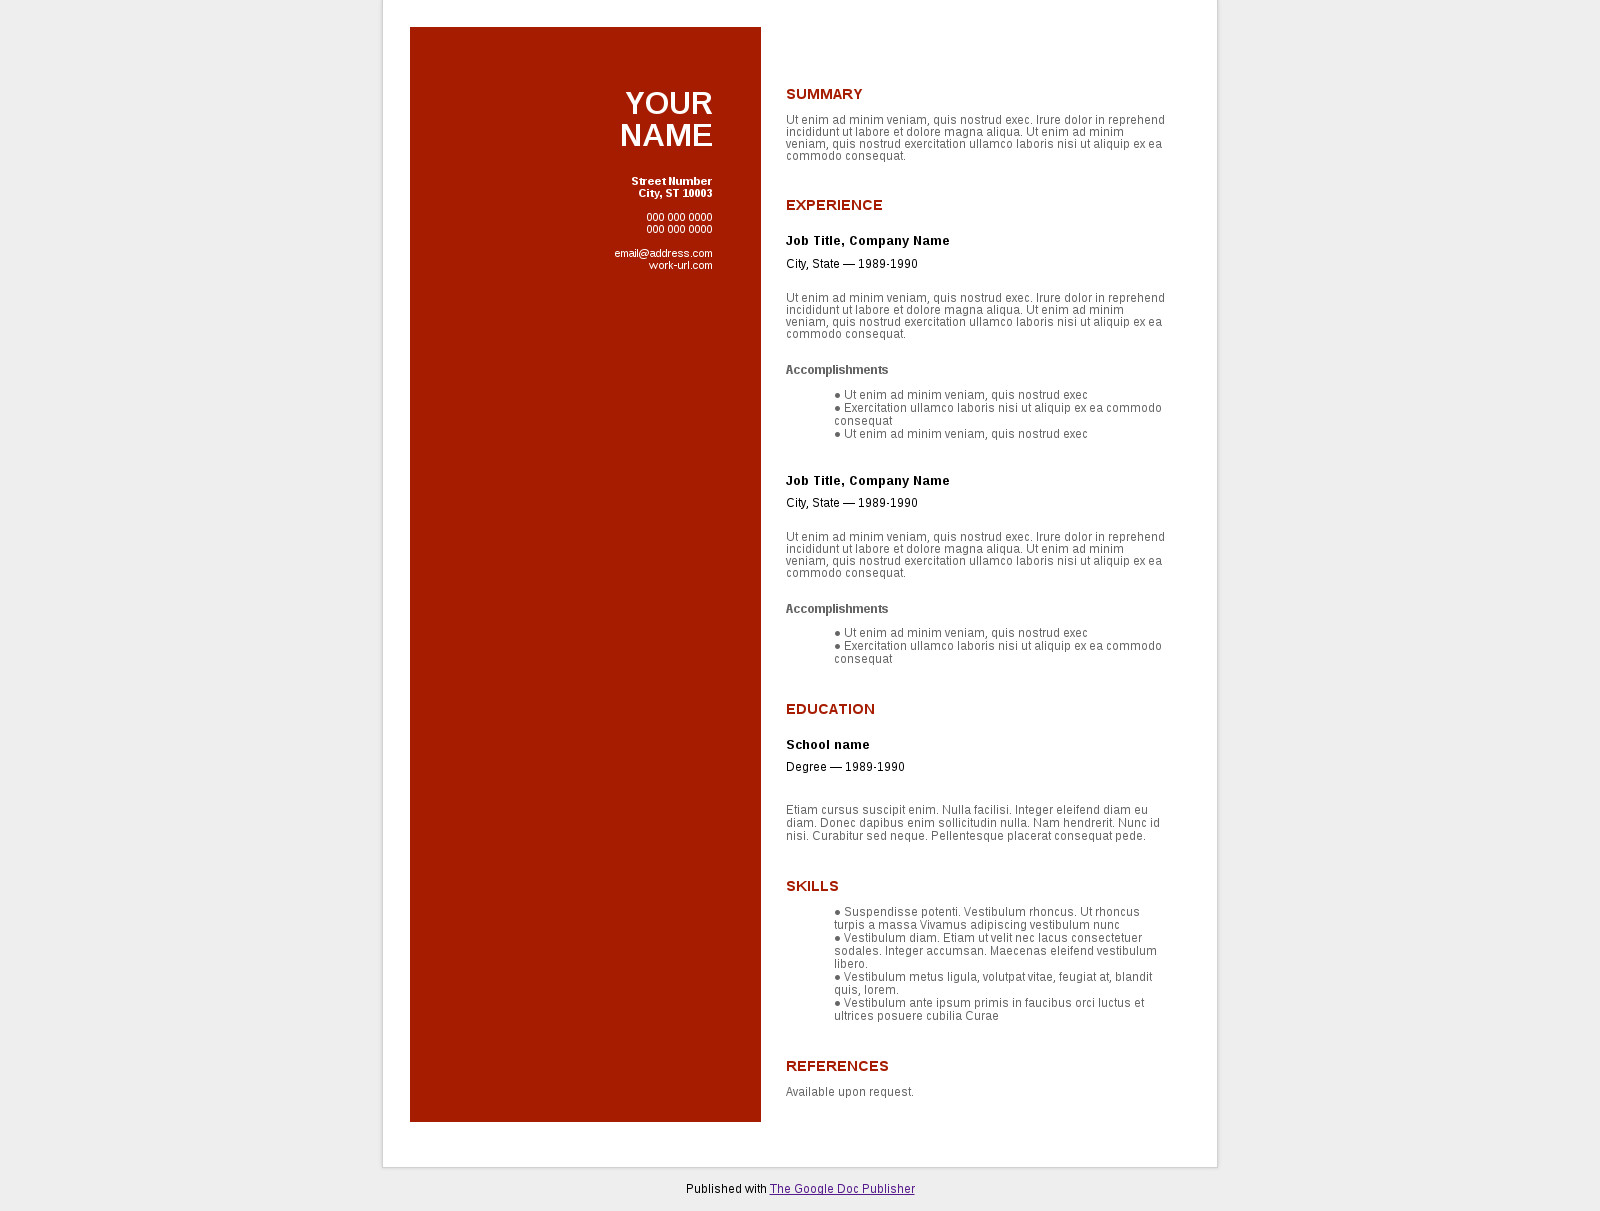 Resume published with gdoc.pub